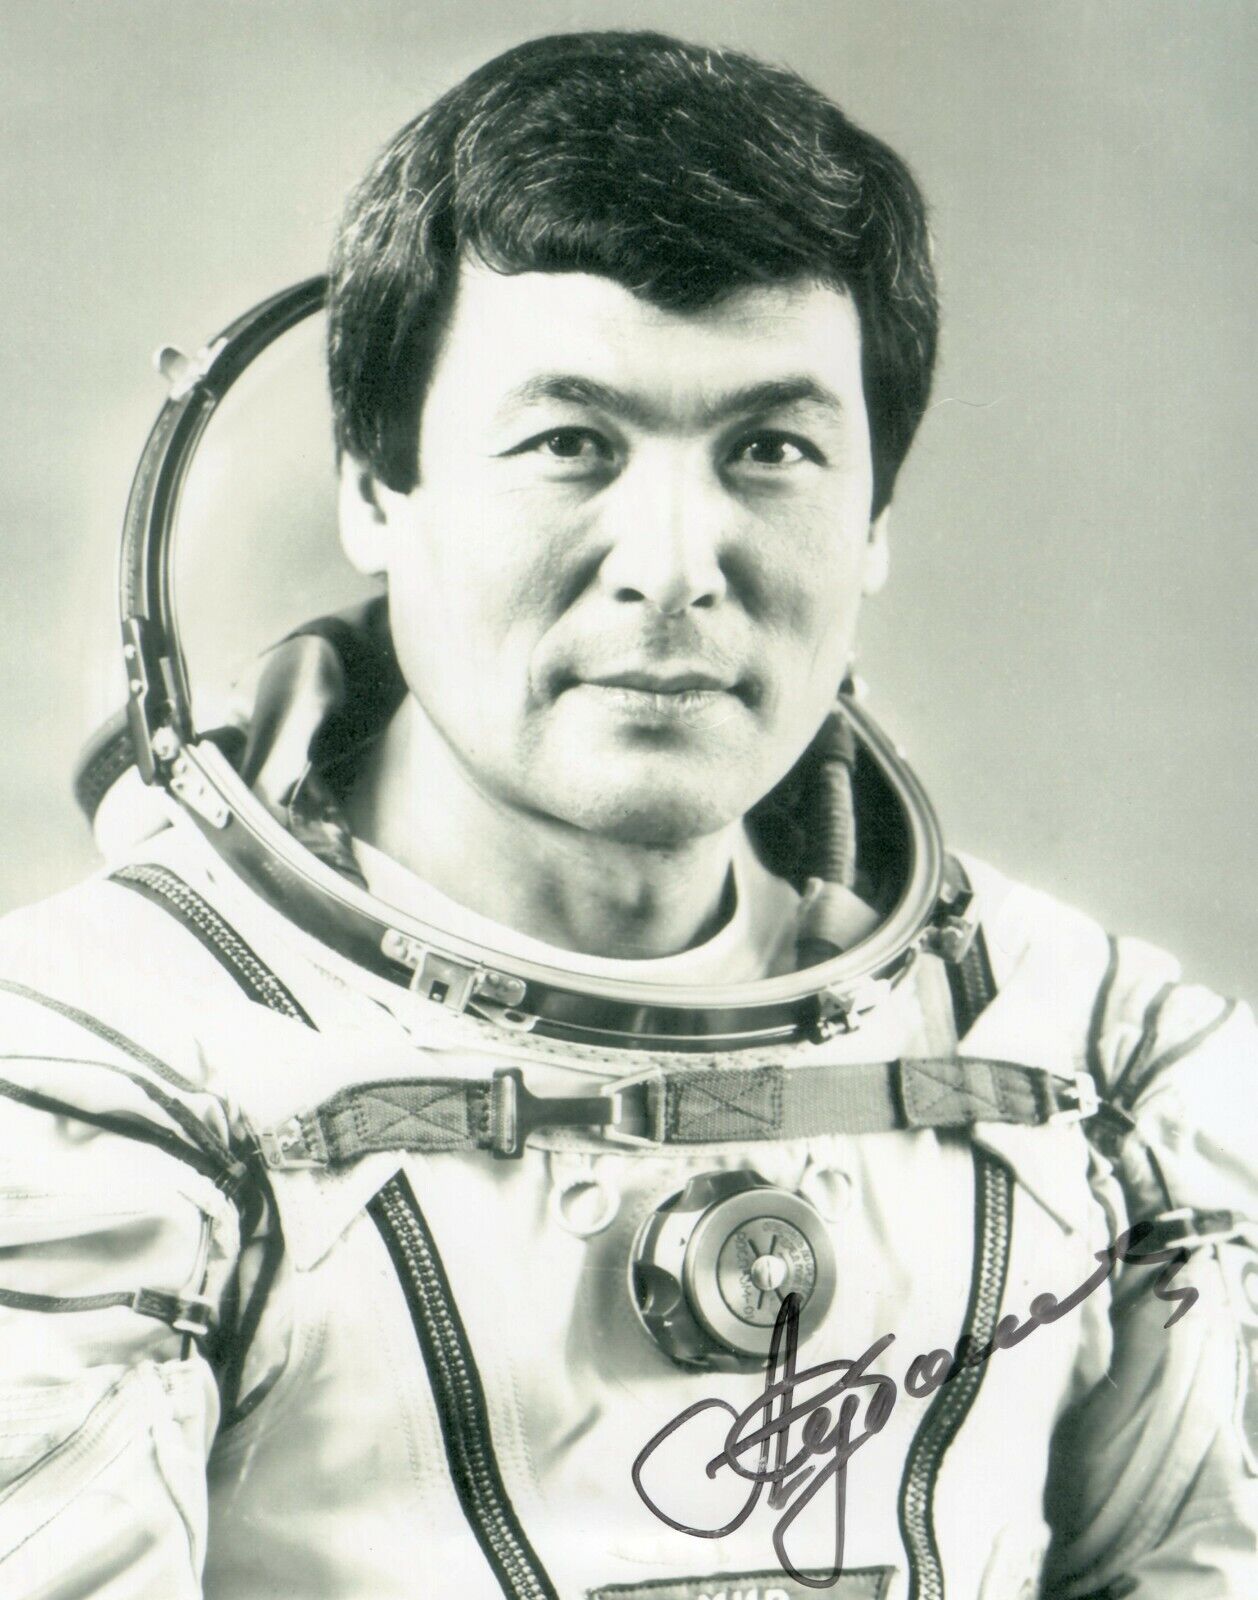 8x10 Original Autographed Photo of Kazakh Cosmonaut Toktar Aubakirov 